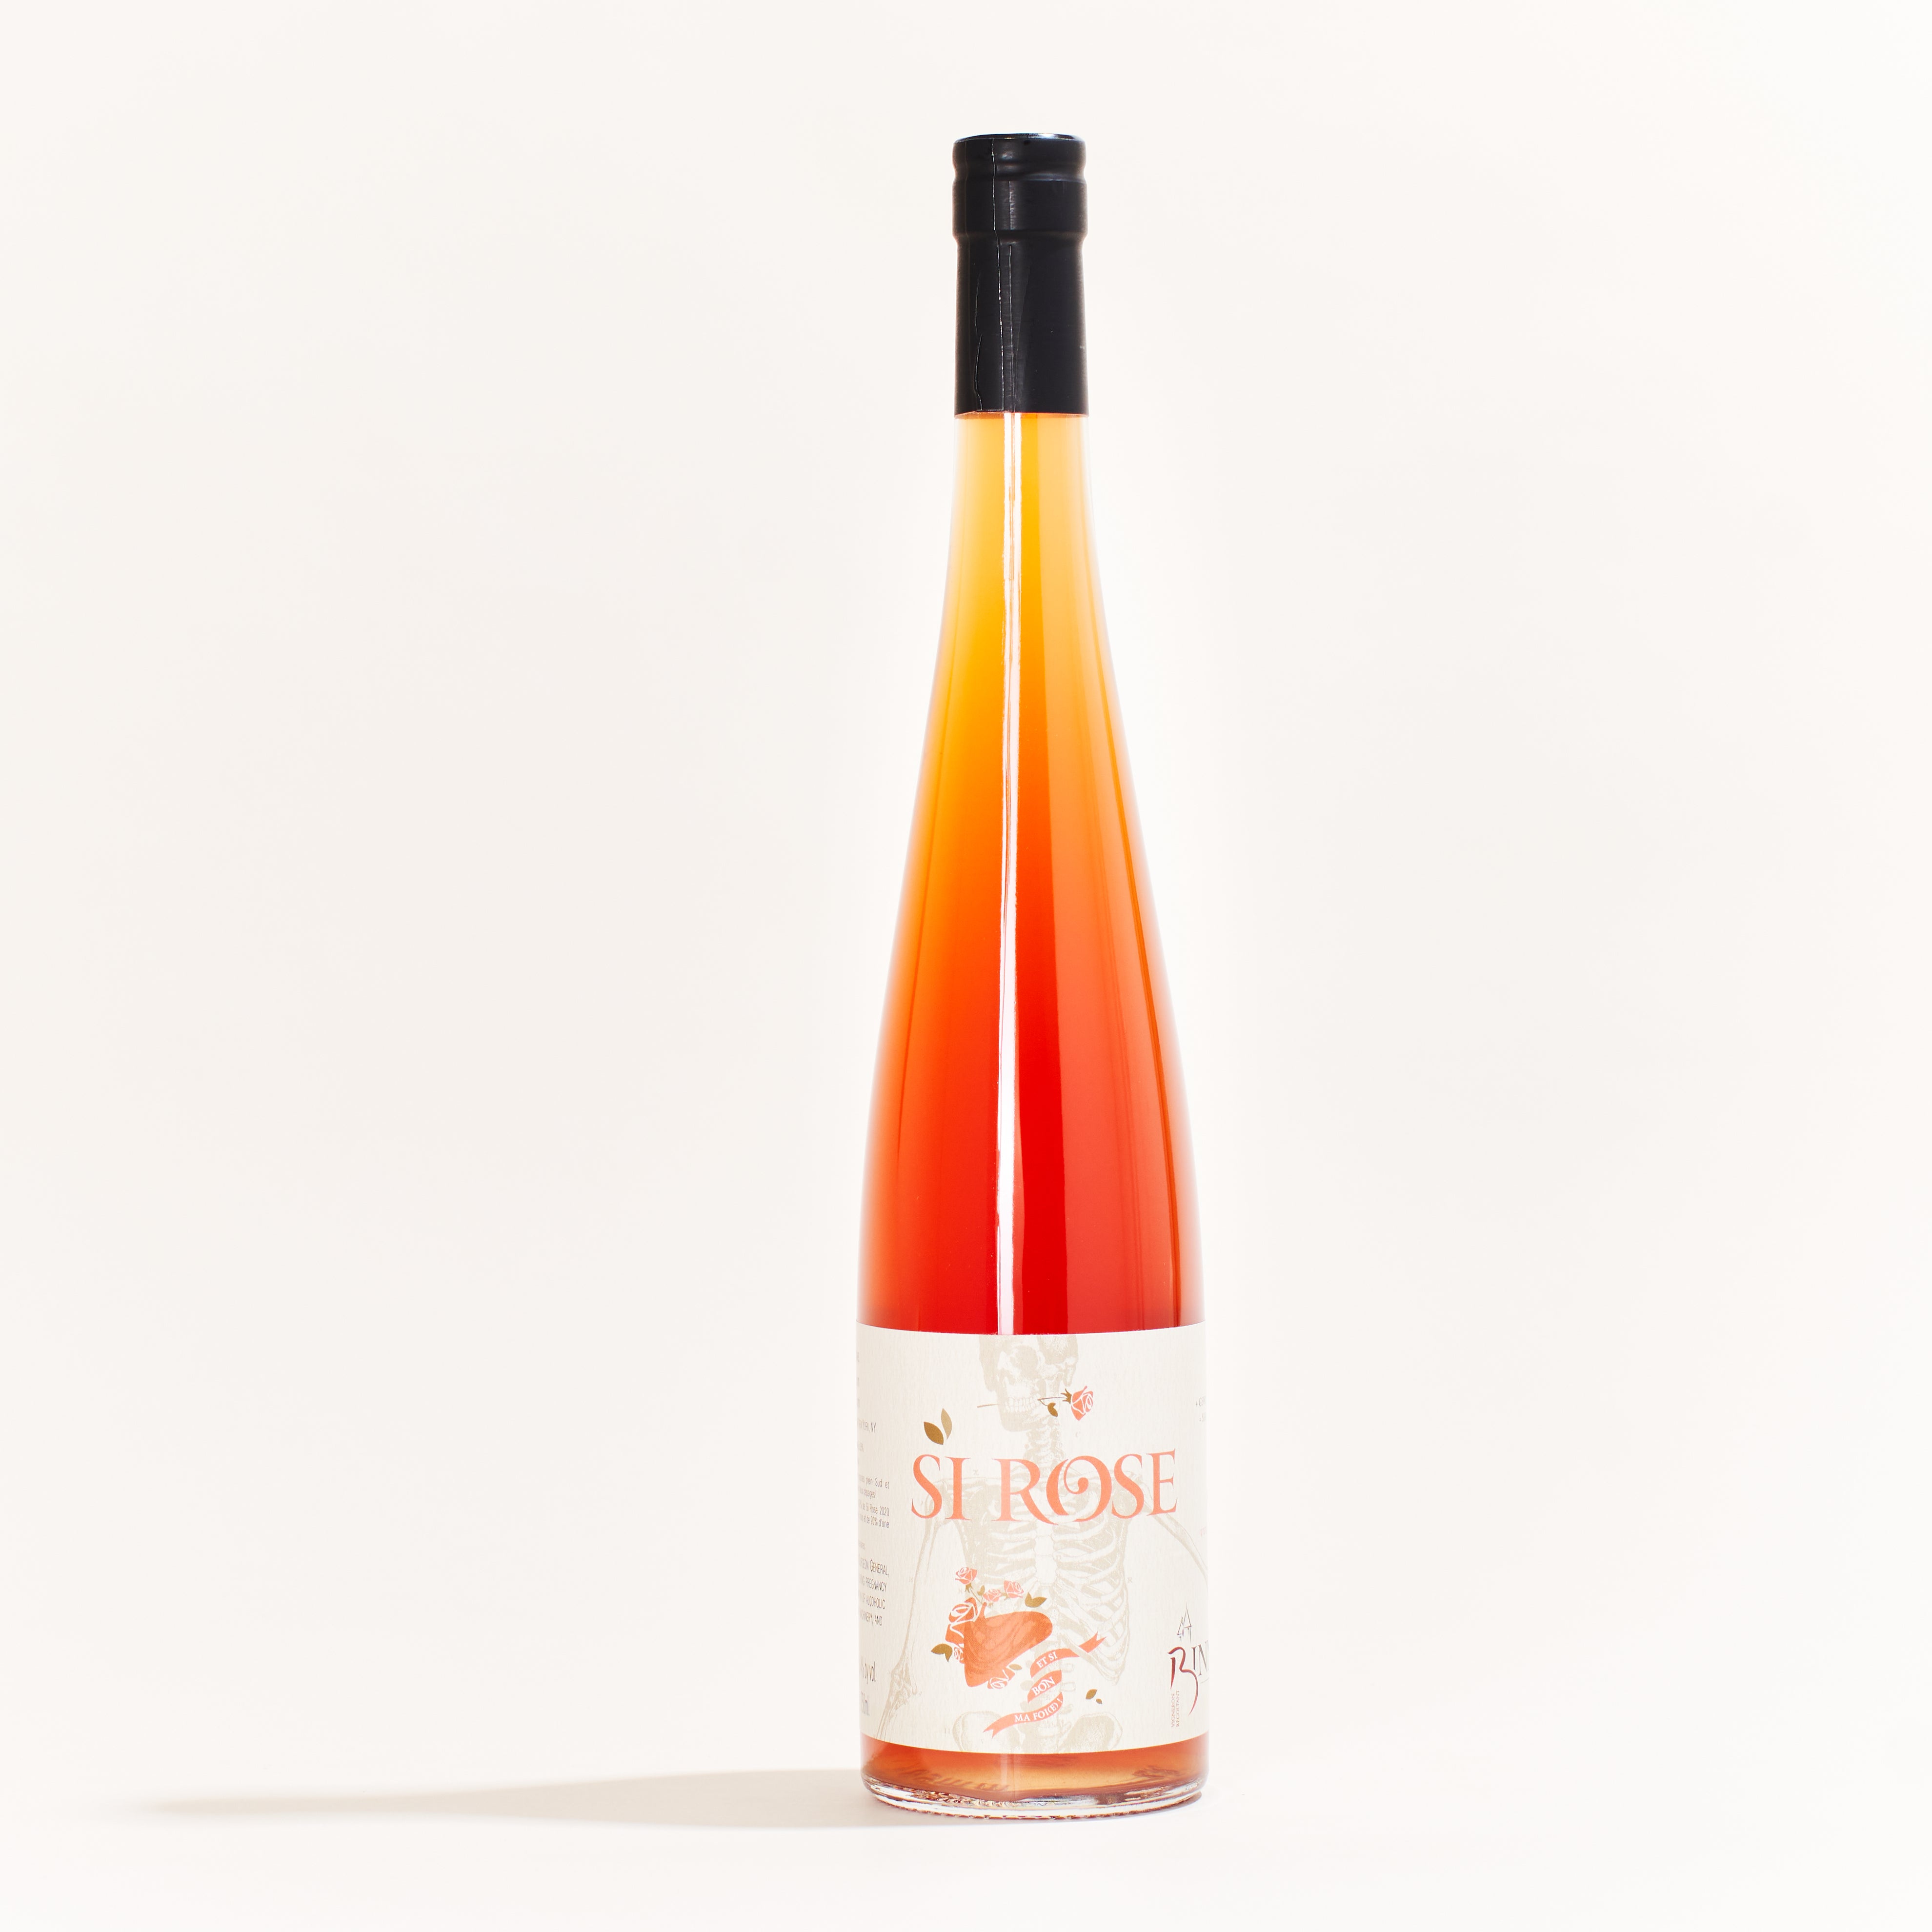 Binner Si Rose Pinot Gris natural orange wine Alsace France